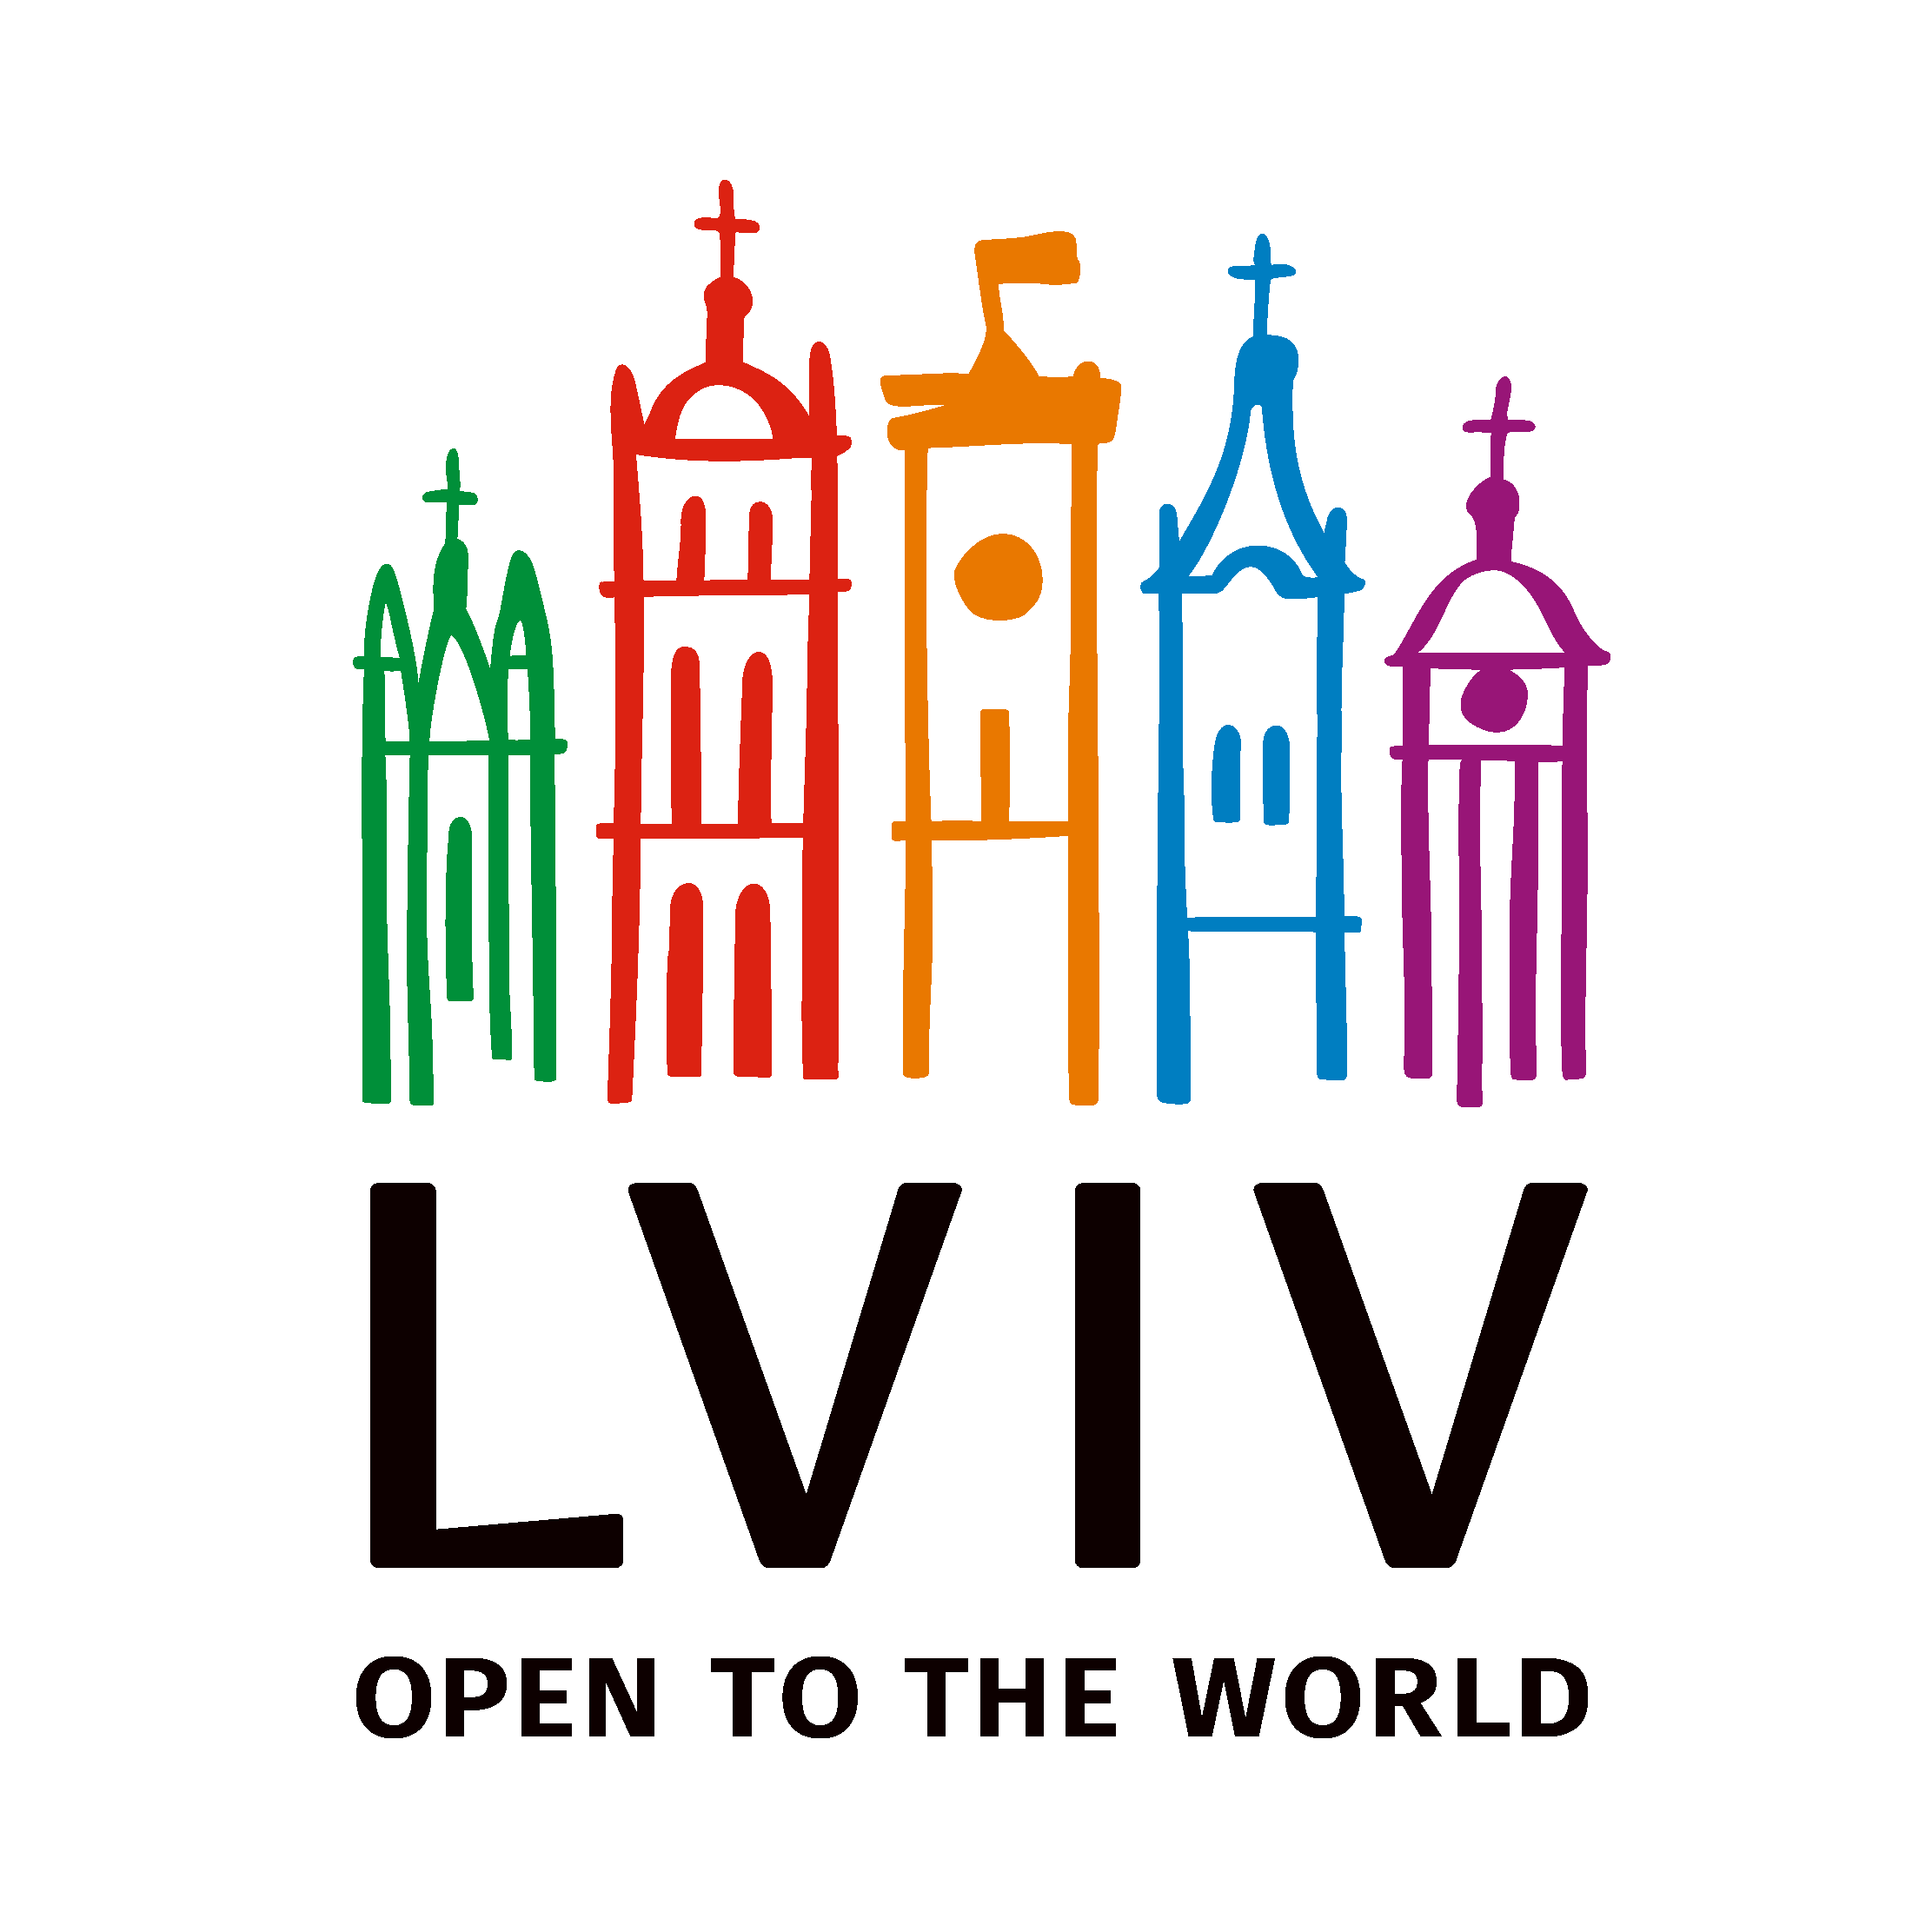 City of Lviv